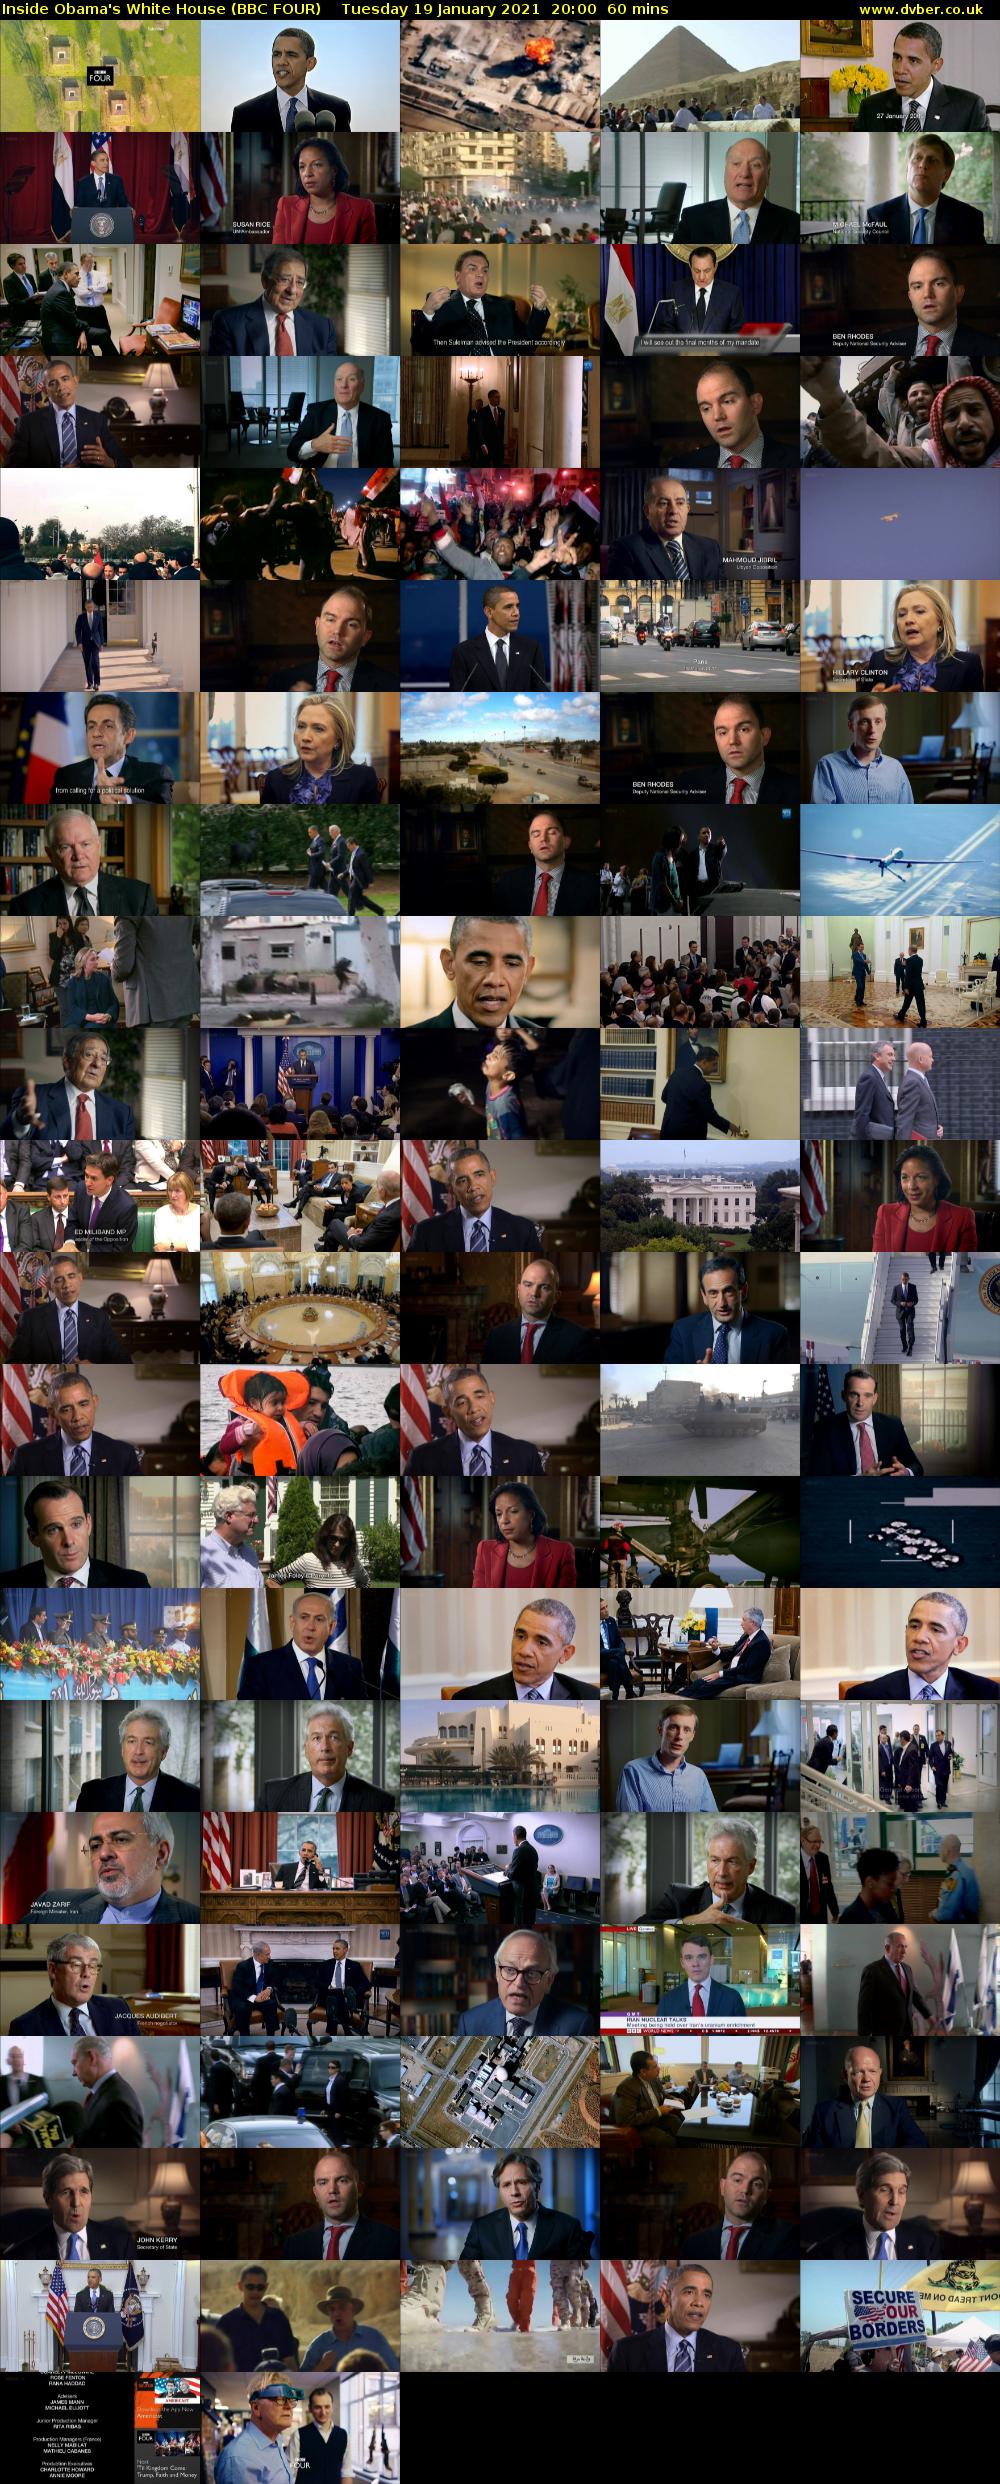 Inside Obama's White House (BBC FOUR) Tuesday 19 January 2021 20:00 - 21:00